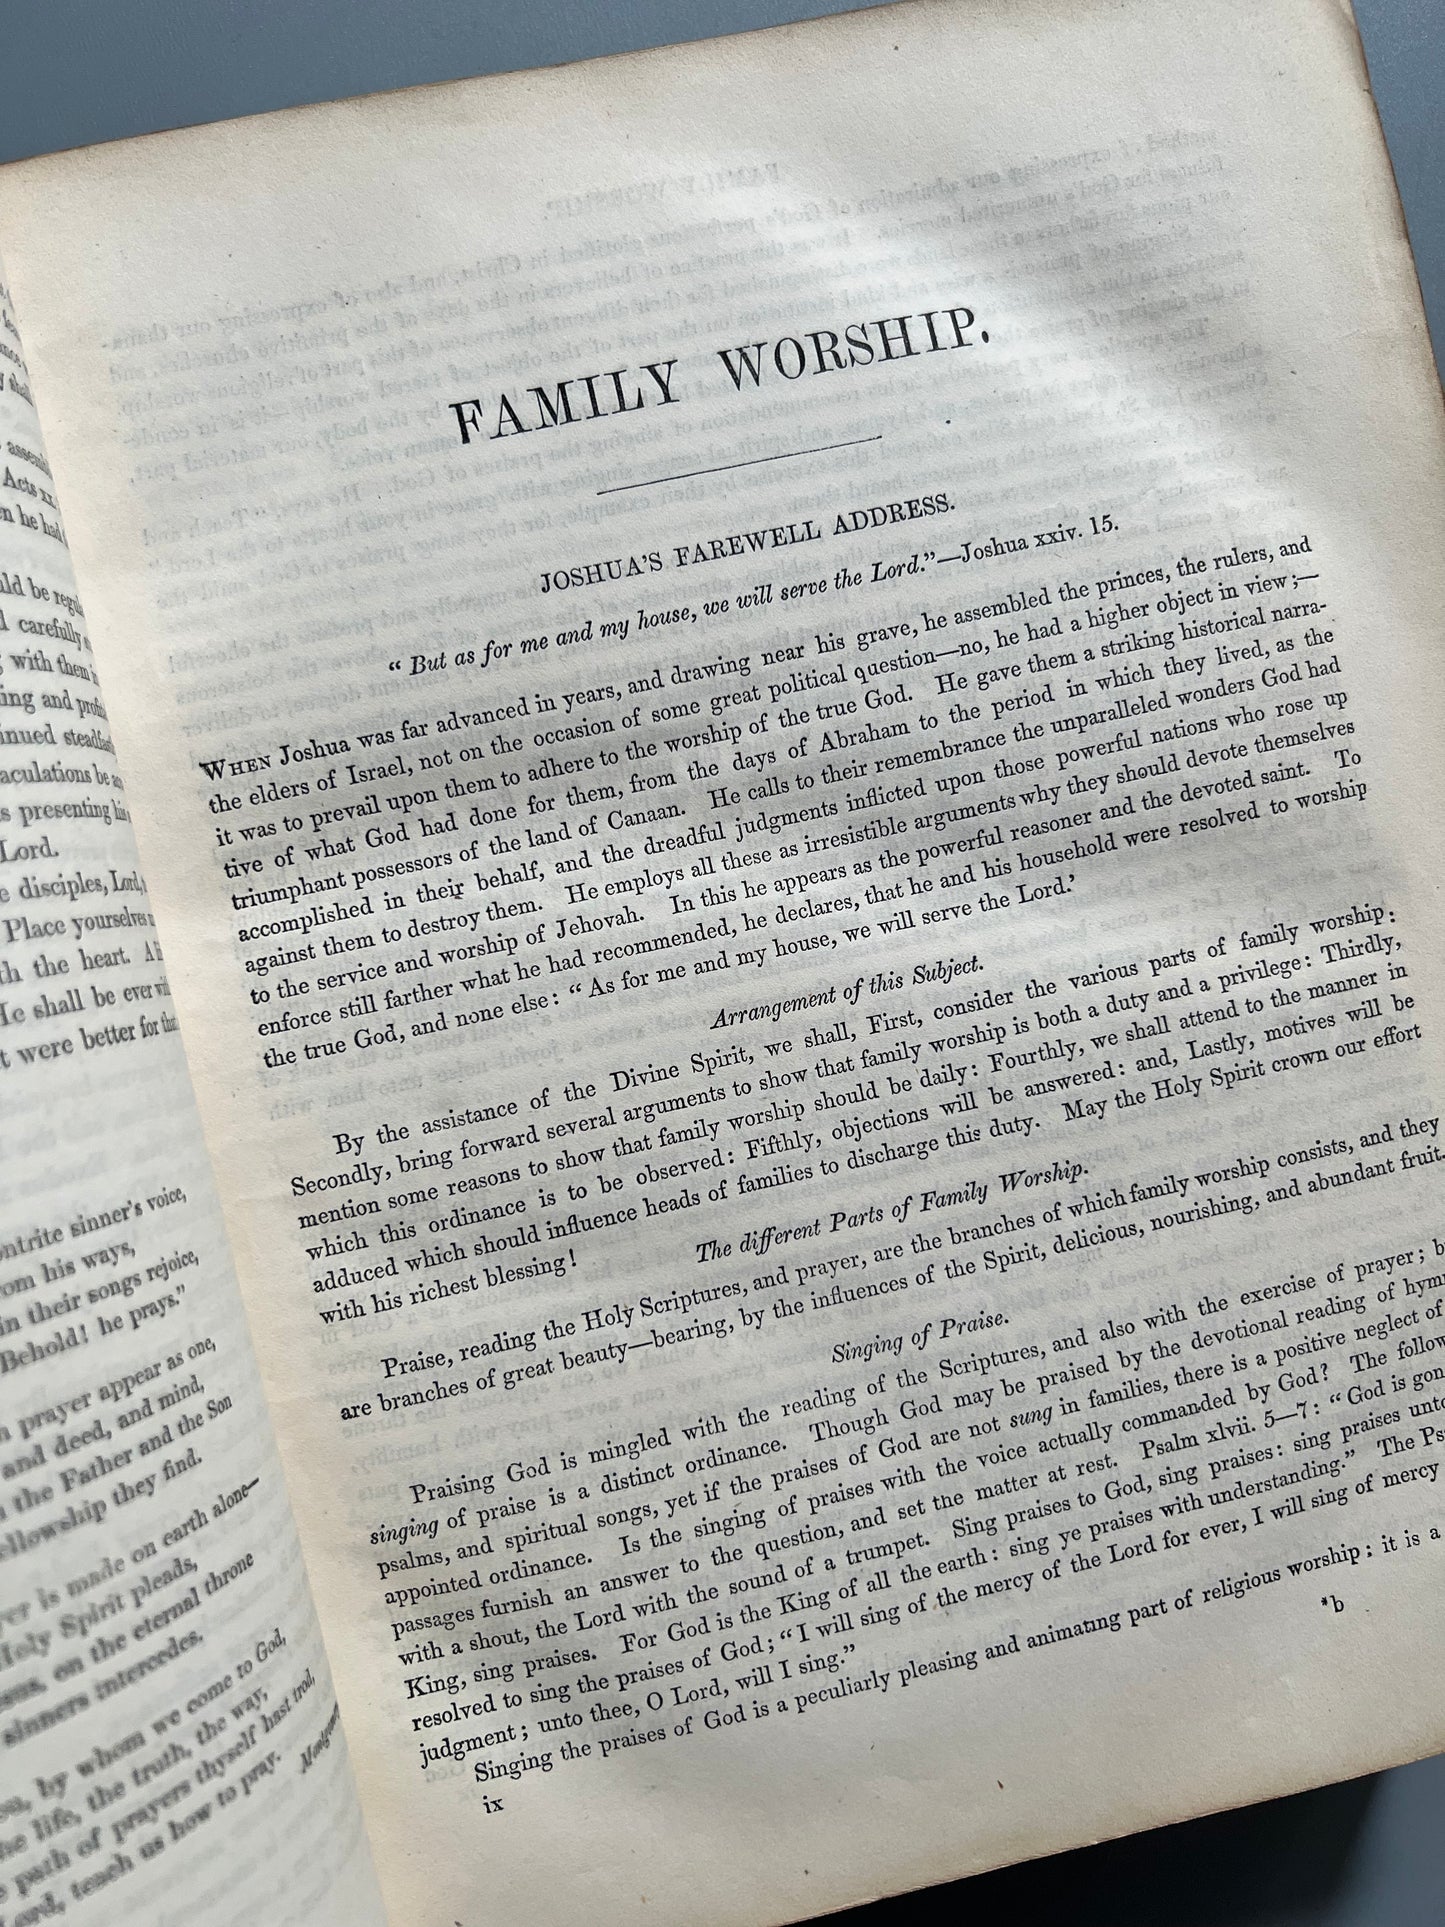 A guide to family devotion, Rev. Alexander Fletcher - George Virtue, ca. 1860